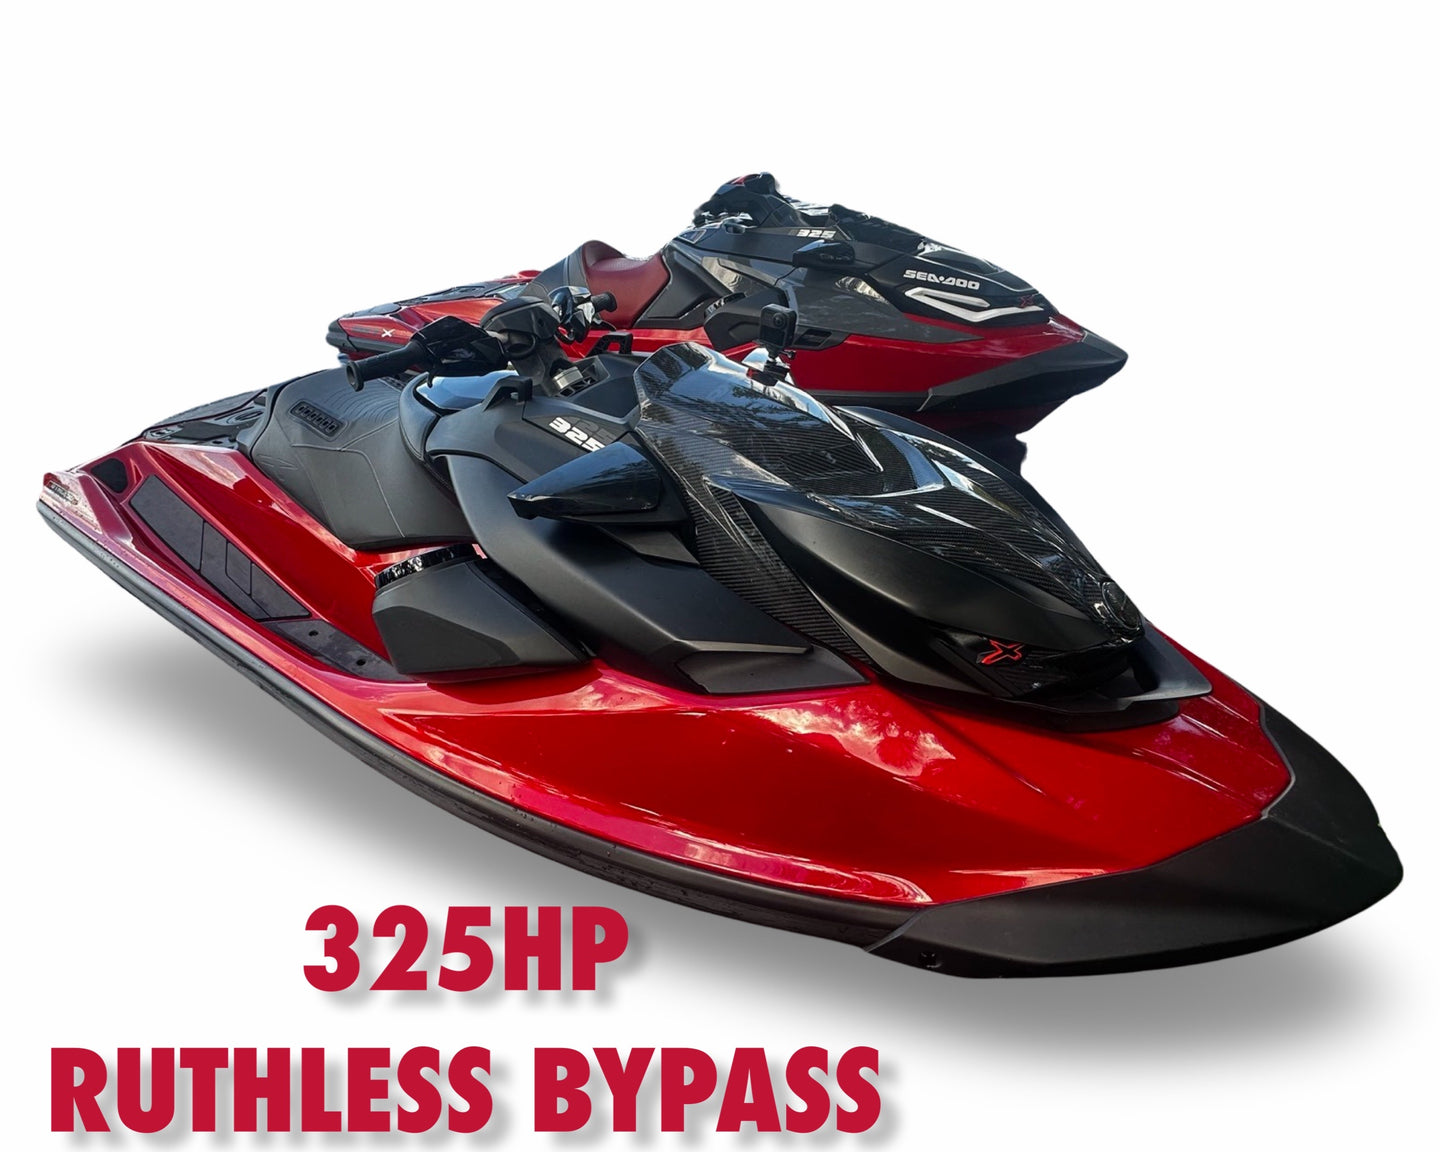 2024 Sea Doo RXTX/RXPX 325 RUTHLESS  80 mph BYPASS (oem Speed Unlock)